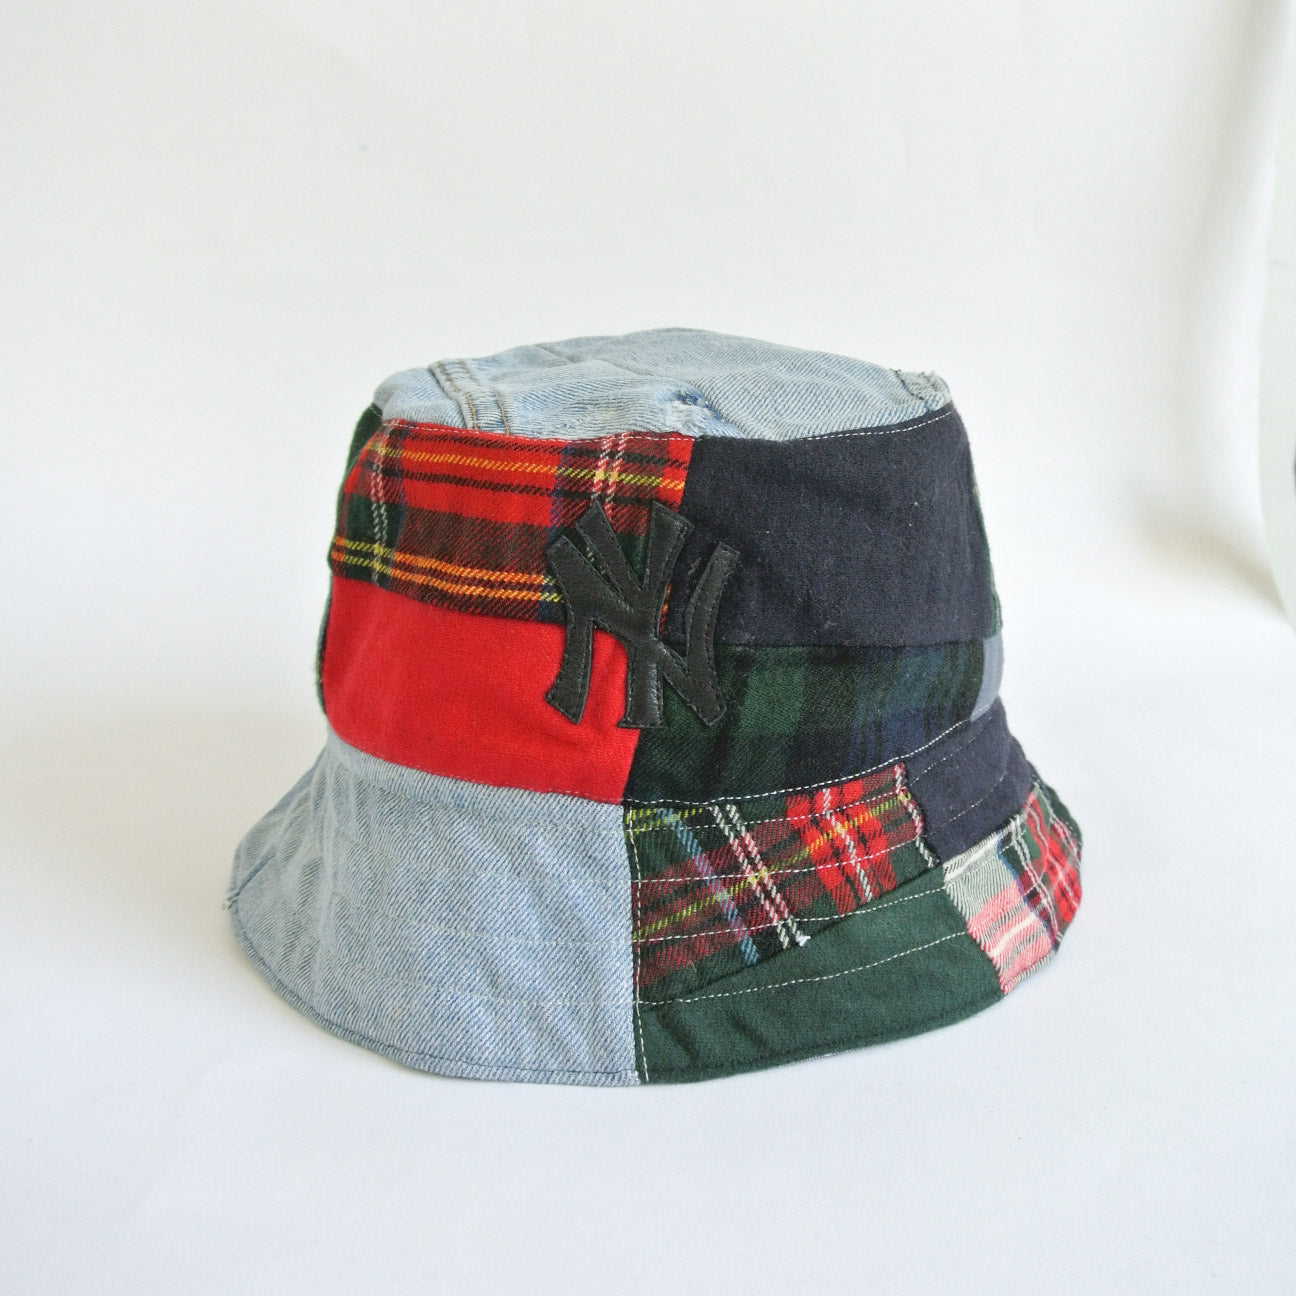 Reworked Bucket Hat "NY" plaid x denim Large